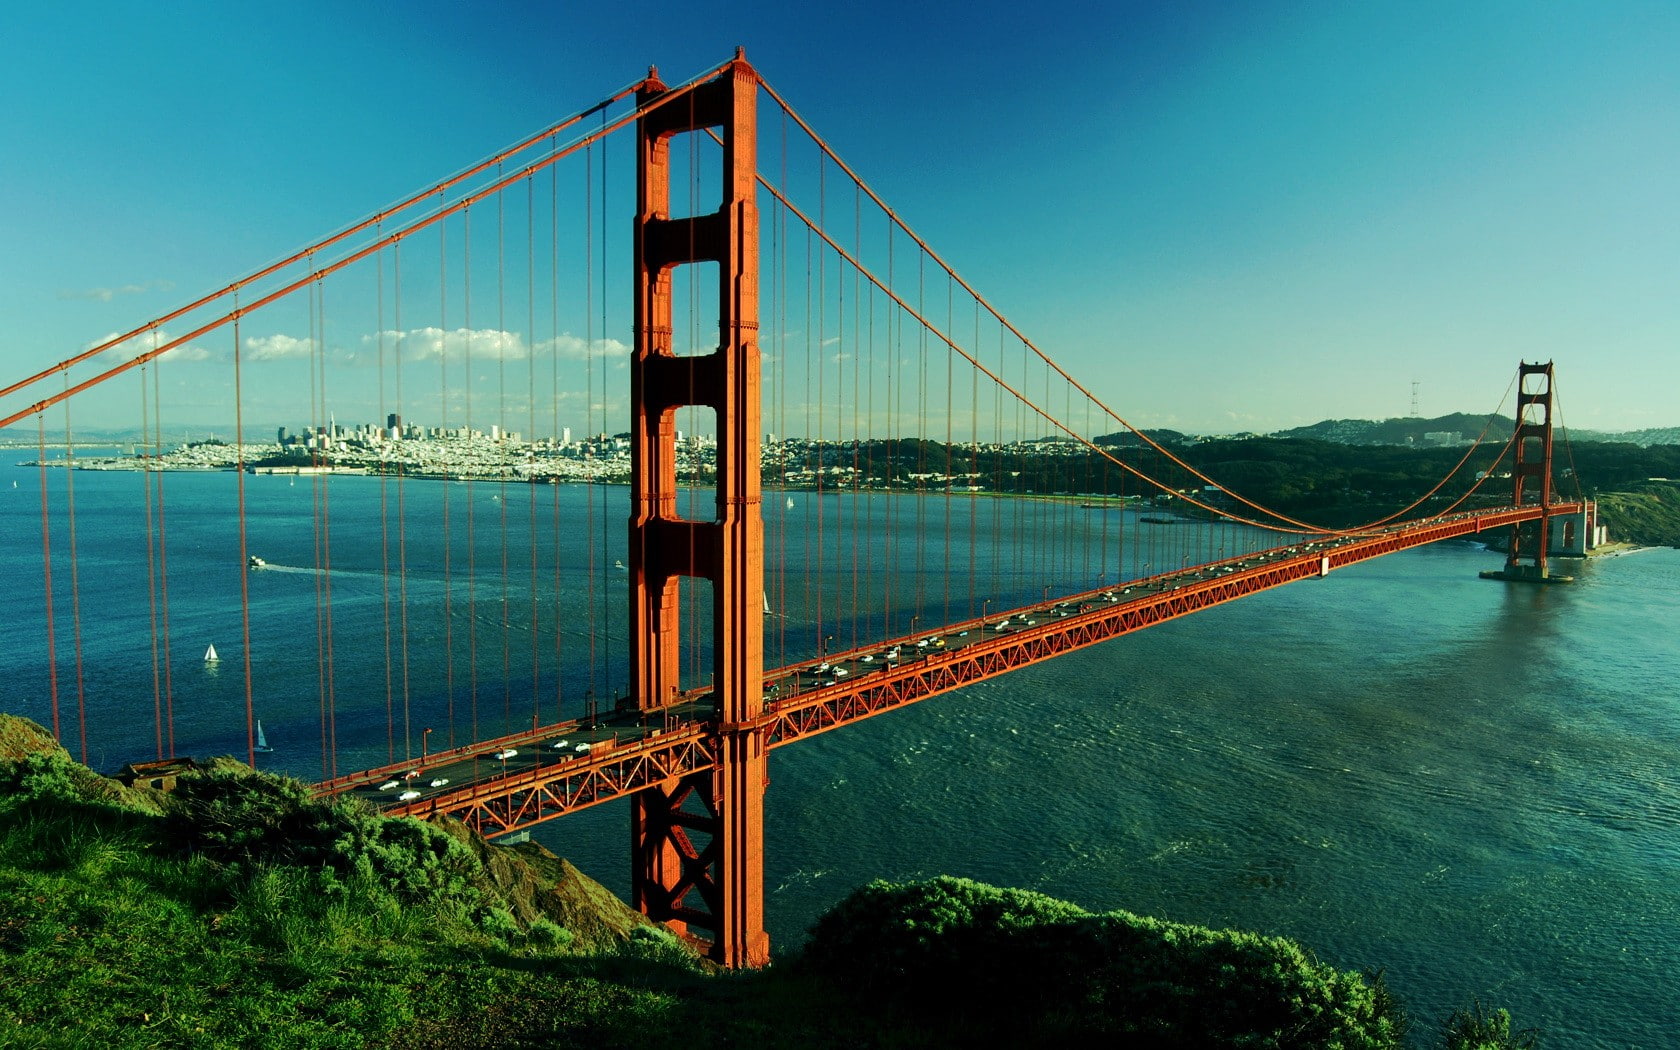 bridge, landscape, San Francisco-Oakland Bay Bridge, city, water